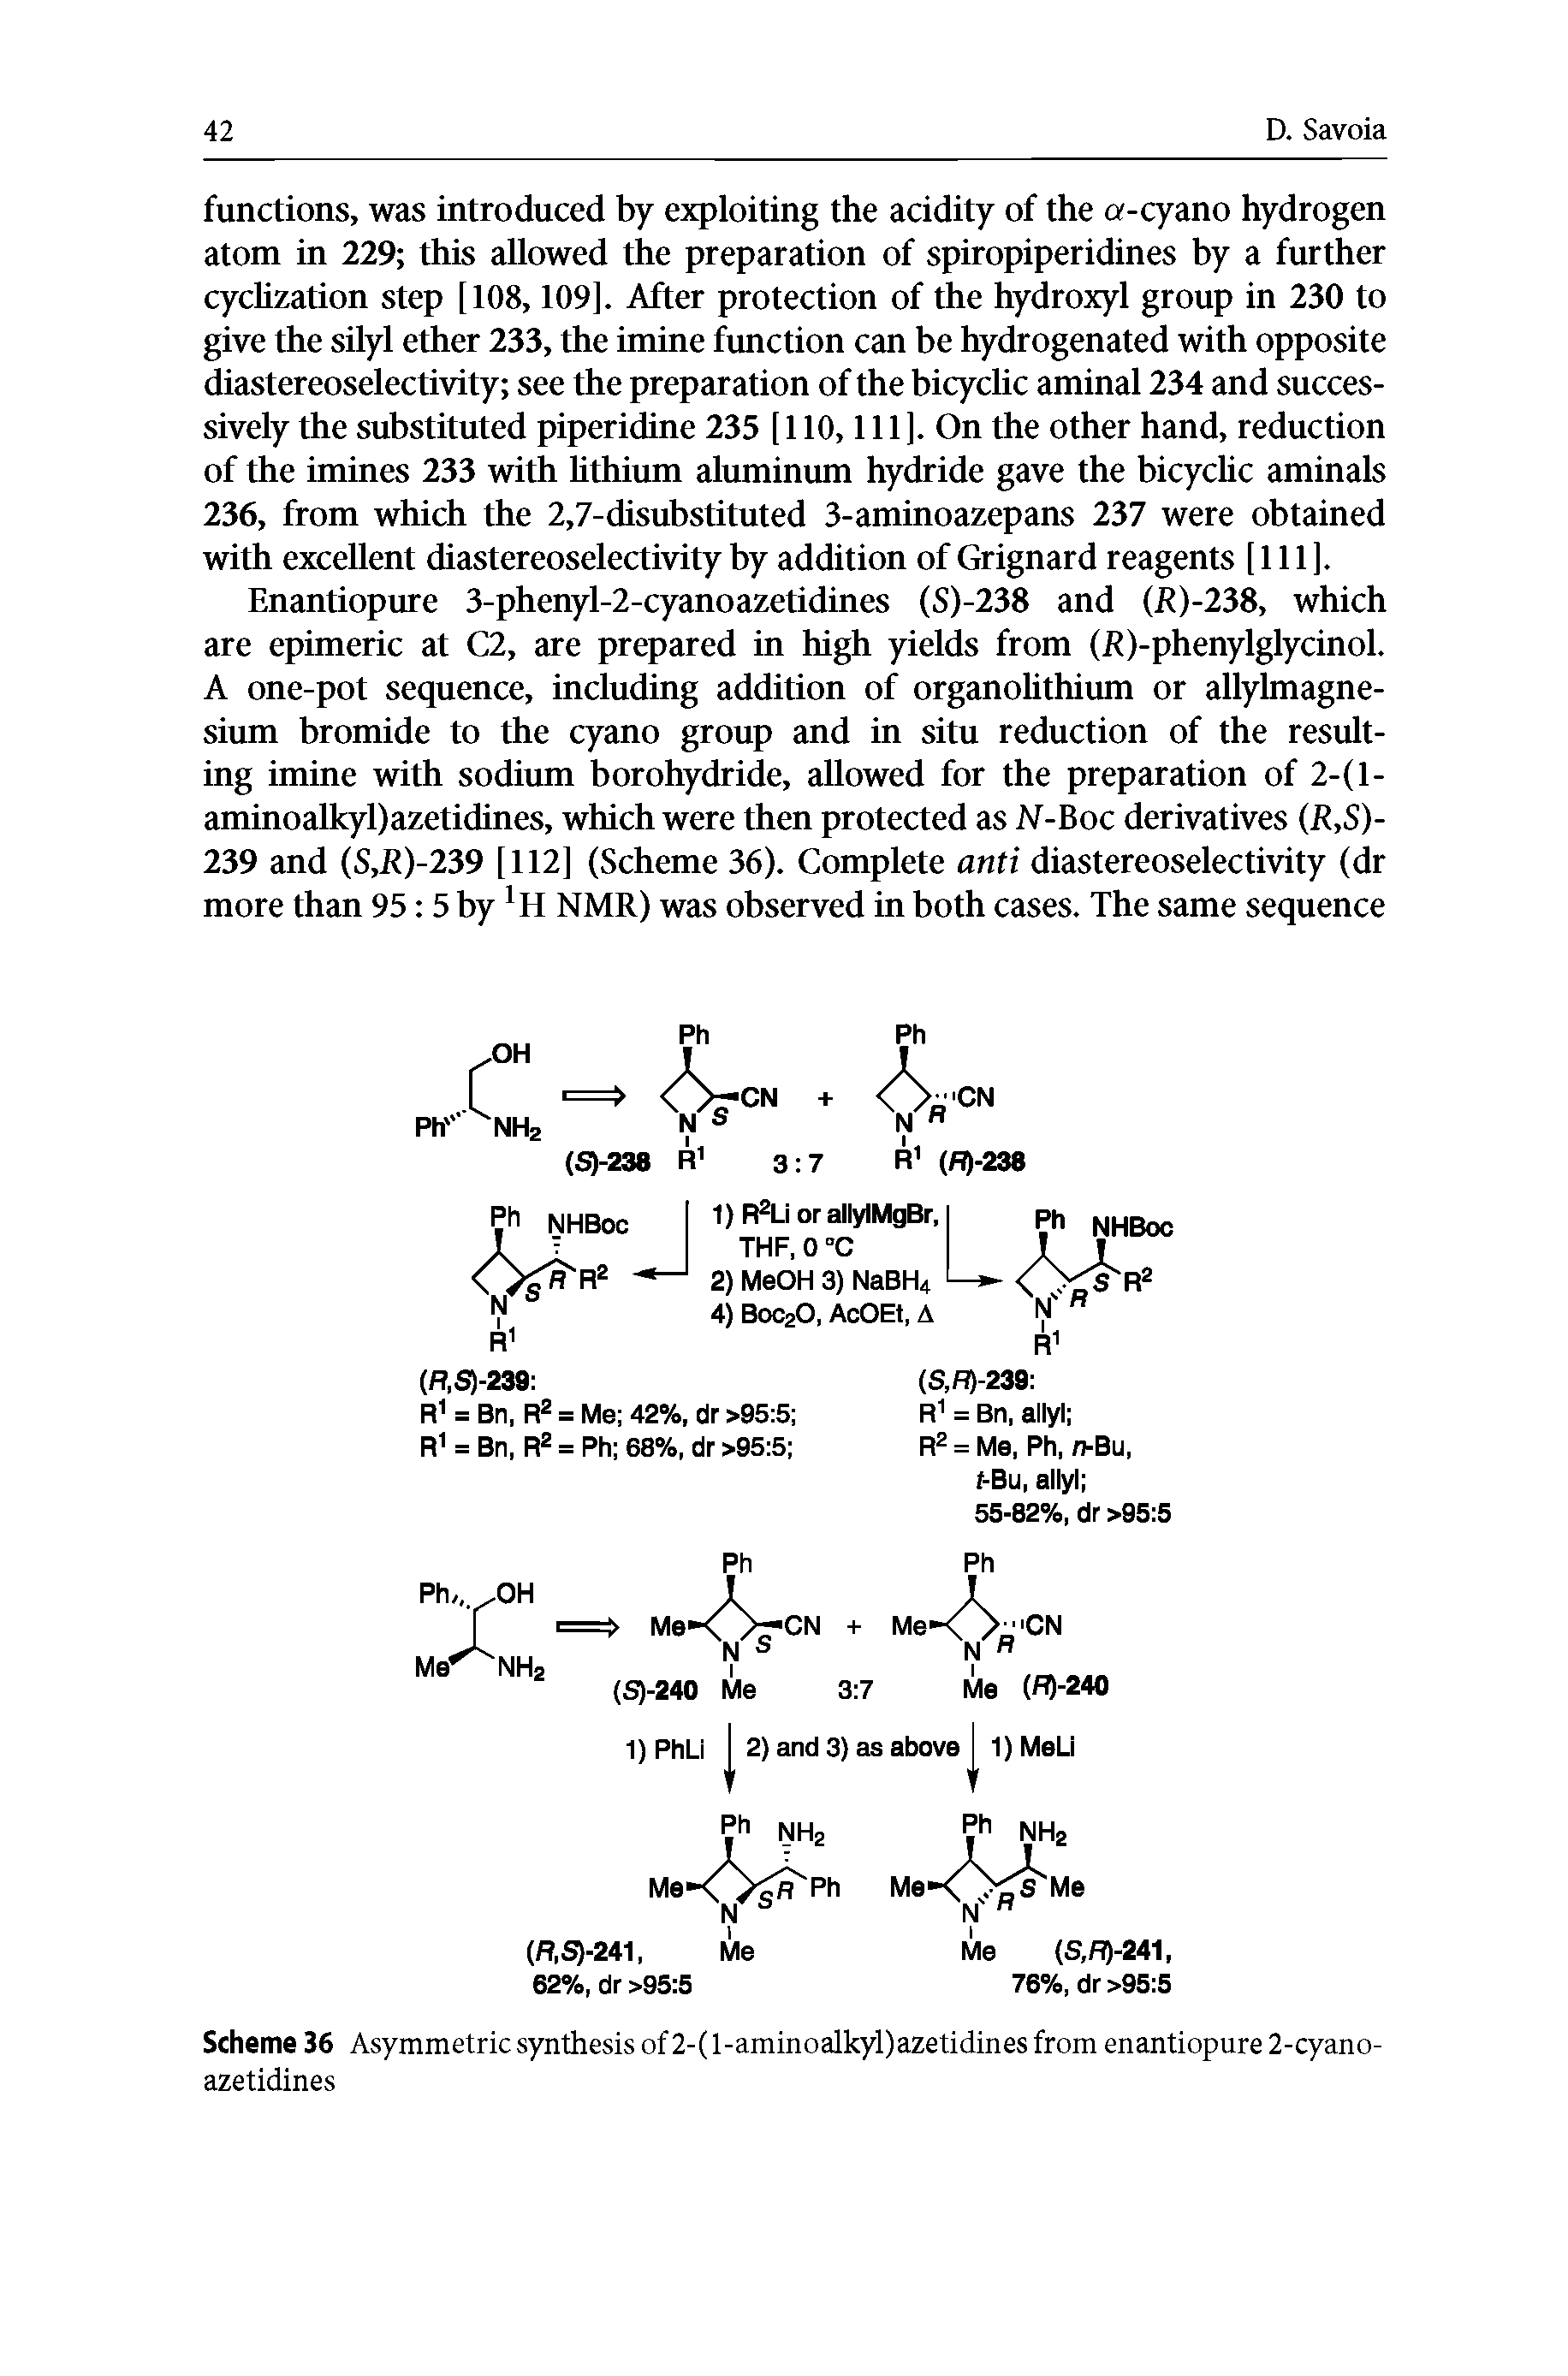 Scheme 36 Asymmetric synthesis of 2-( l-aminoalkyl)azetidines from enantiopure 2-cyano-azetidines...